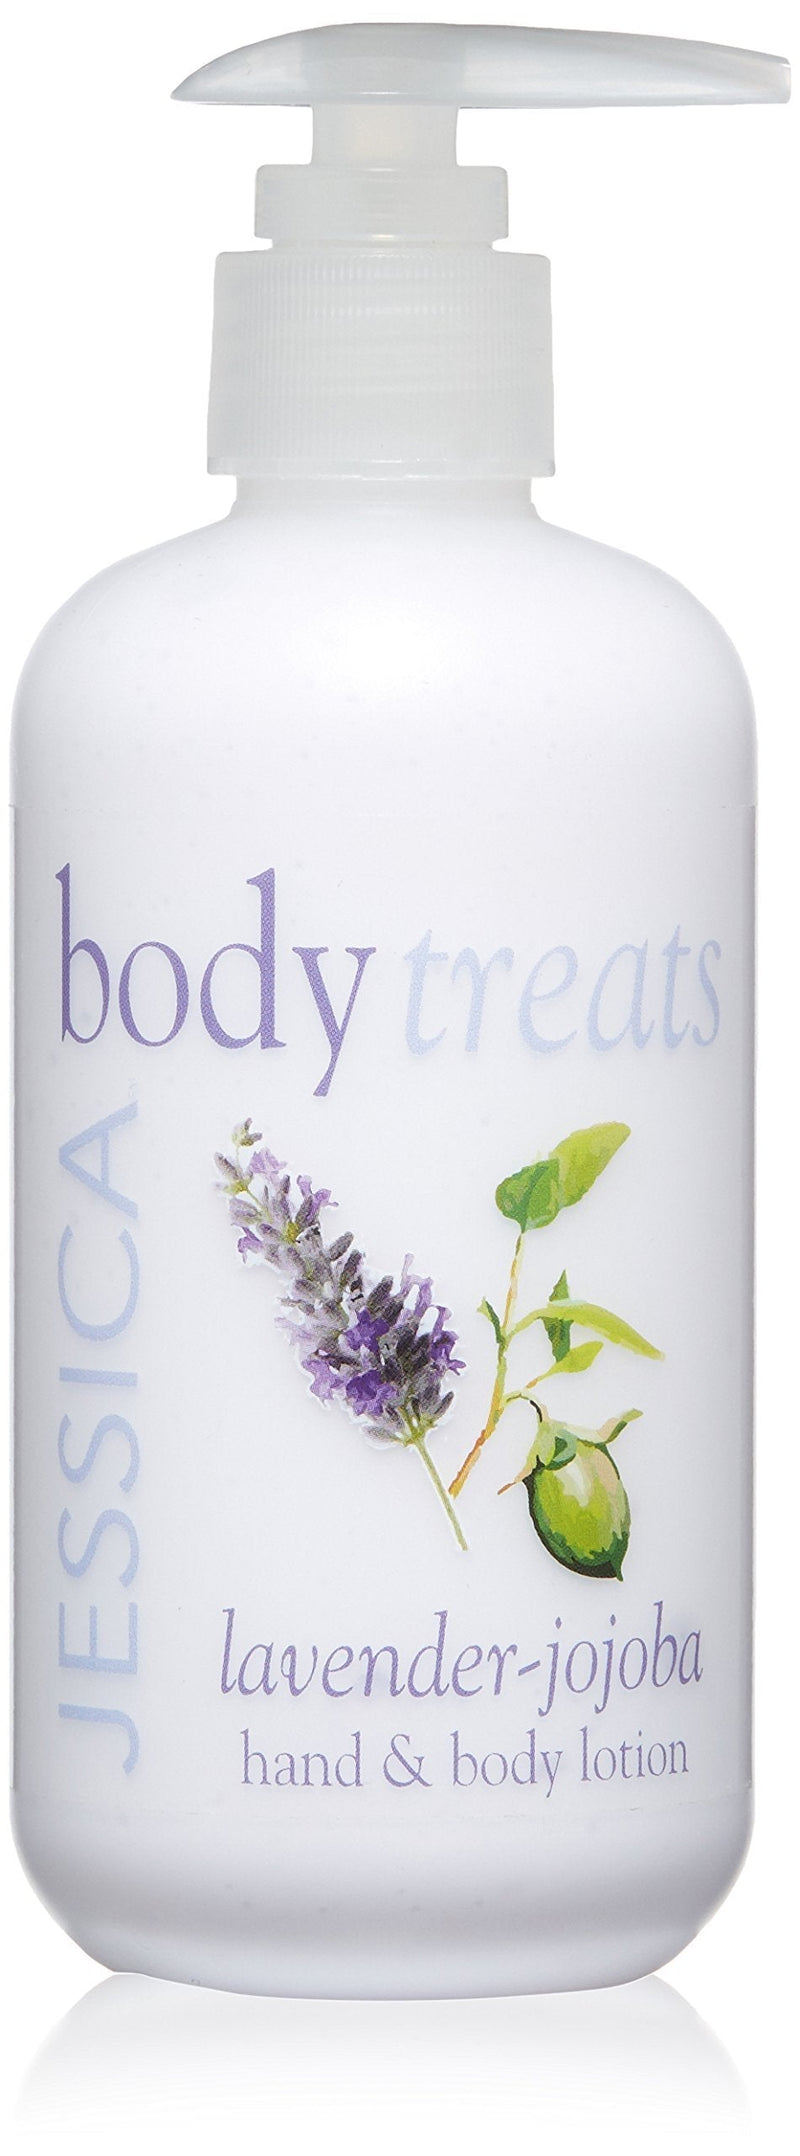 Jessica Body Treats Hand And Body Lotion, Lavender Jojoba, 8.3 Fl Oz - BeesActive Australia